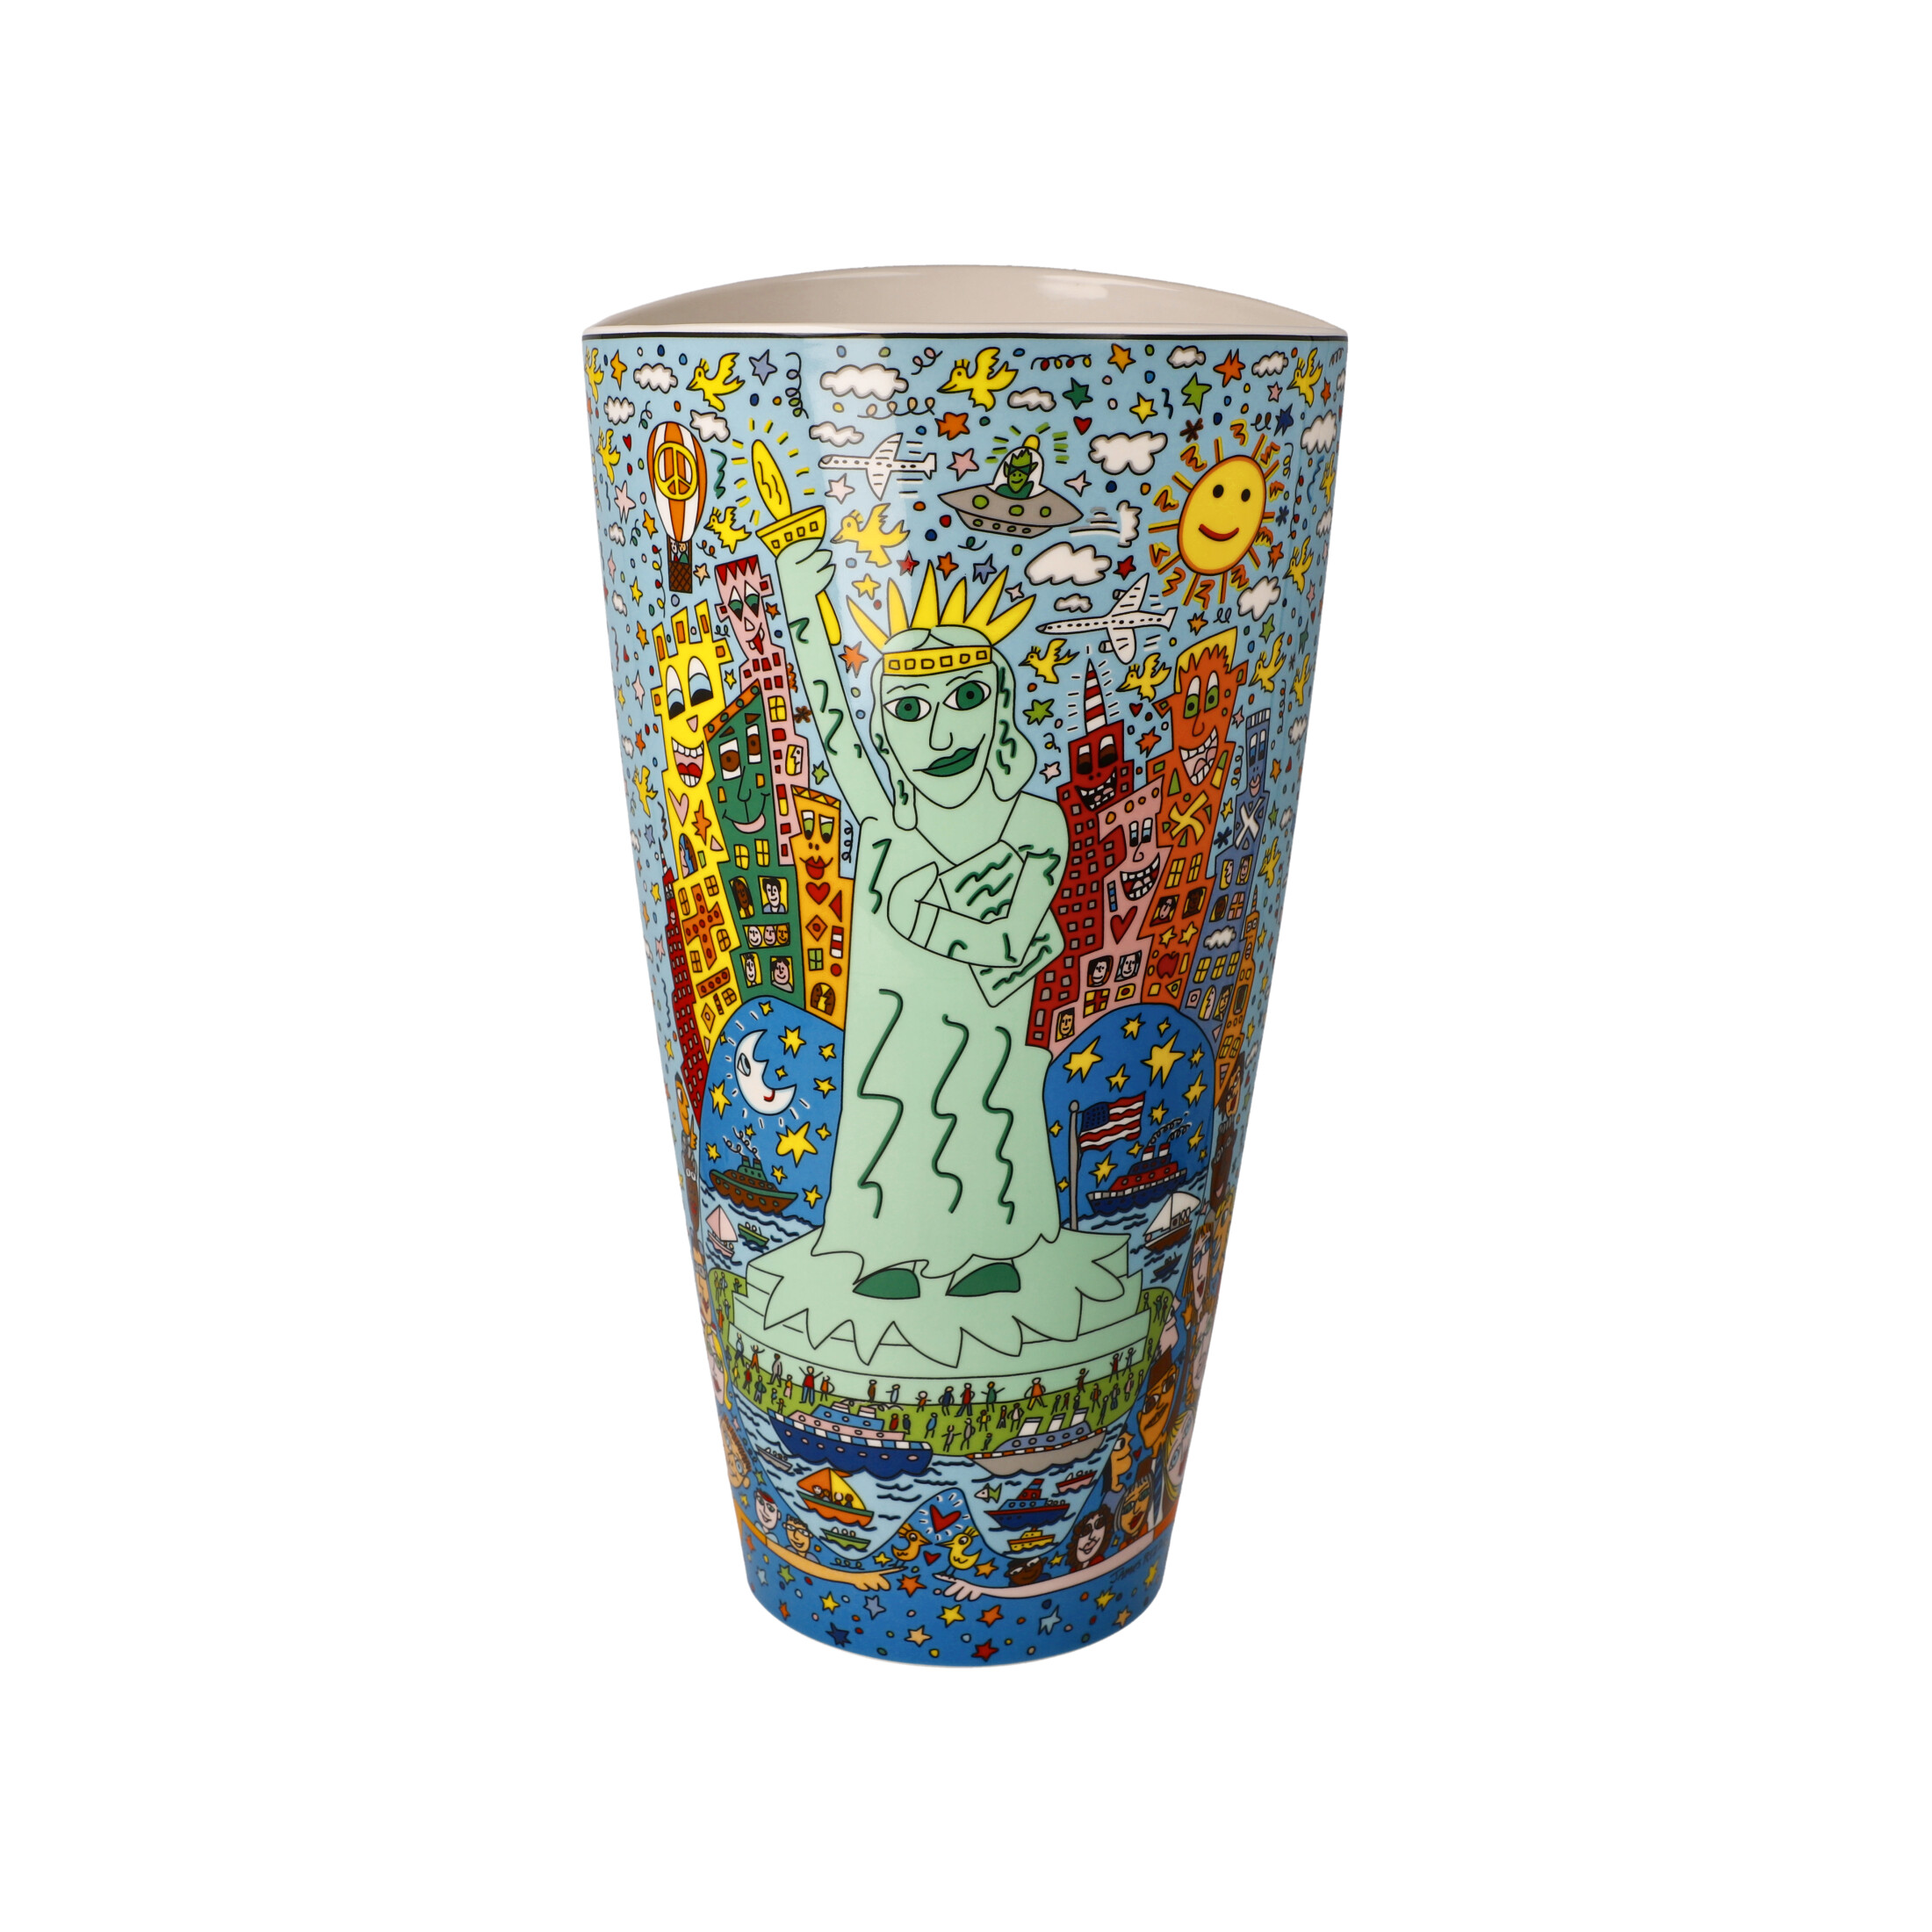 James Rizzi Vase  - The Big Apple is Big on Liberty, Pop Art, Porzellan 